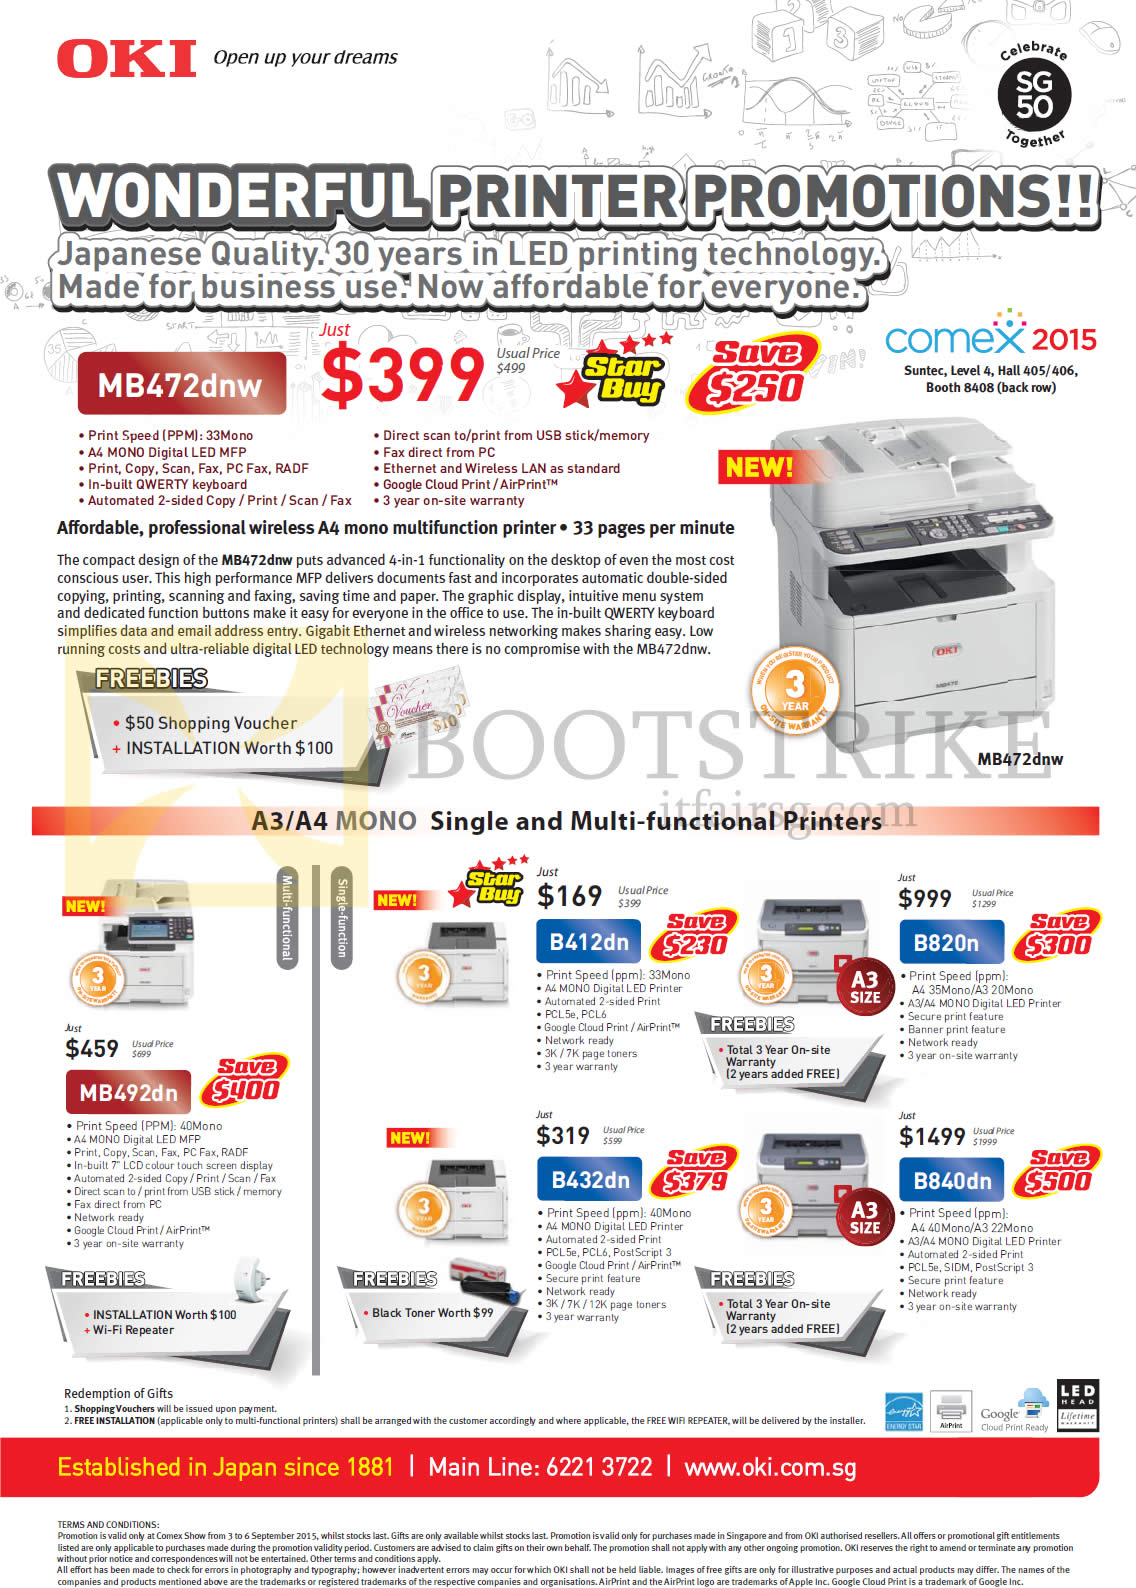 COMEX 2015 price list image brochure of OKI Printers LED MB472dnw, MB492dn, B412dn, B432dn, B820n, B840dn